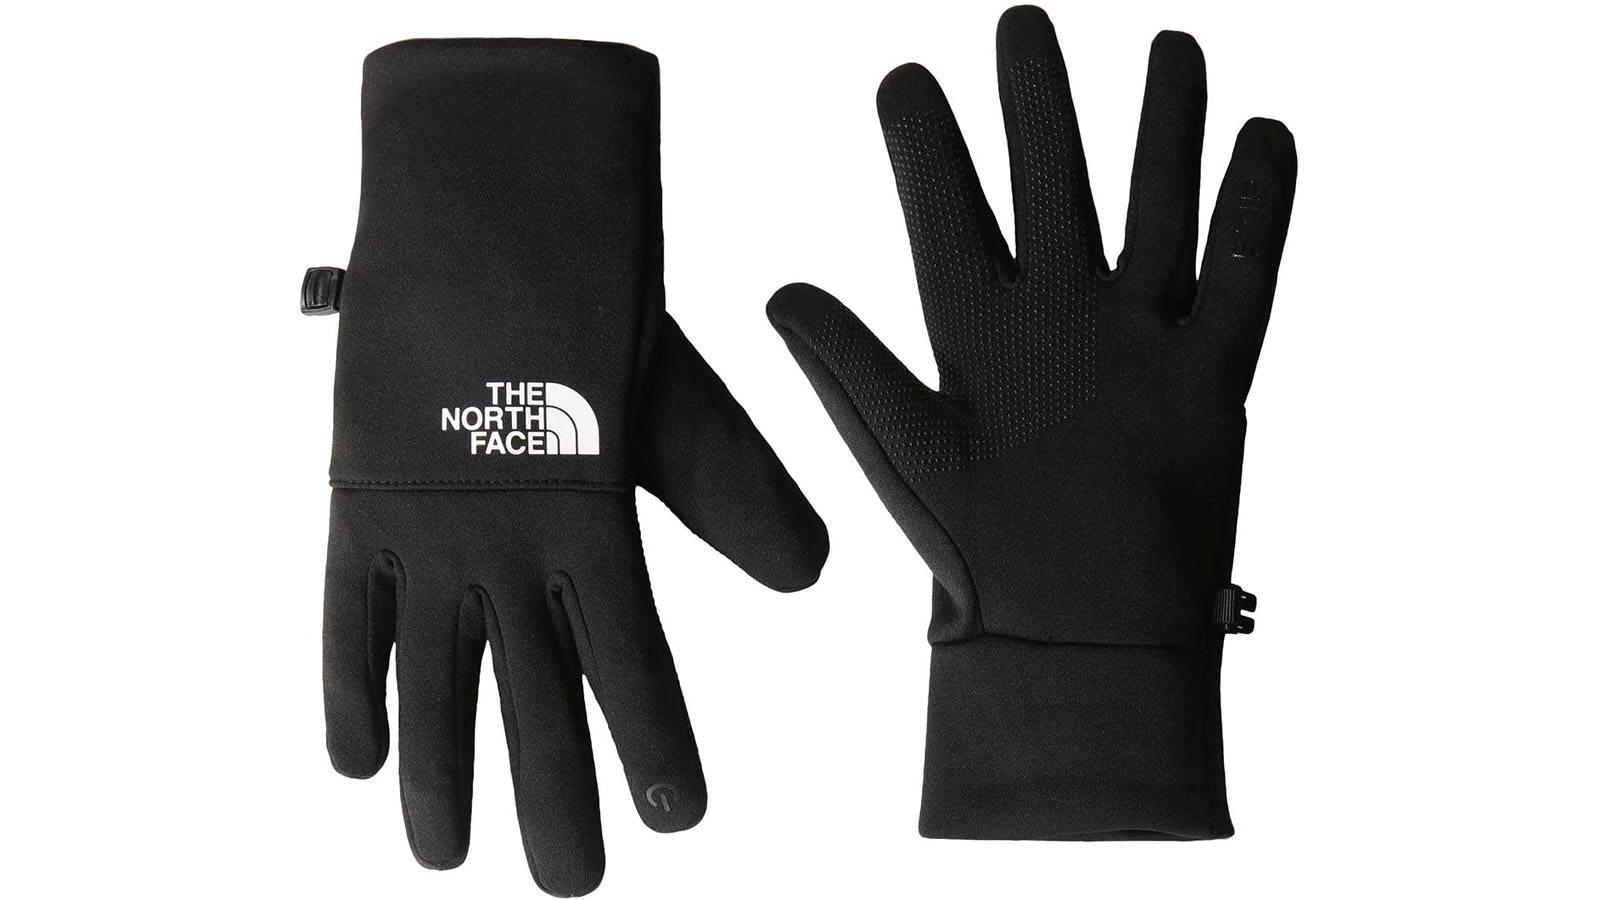 North Face Etip Gloves - Best activewear option